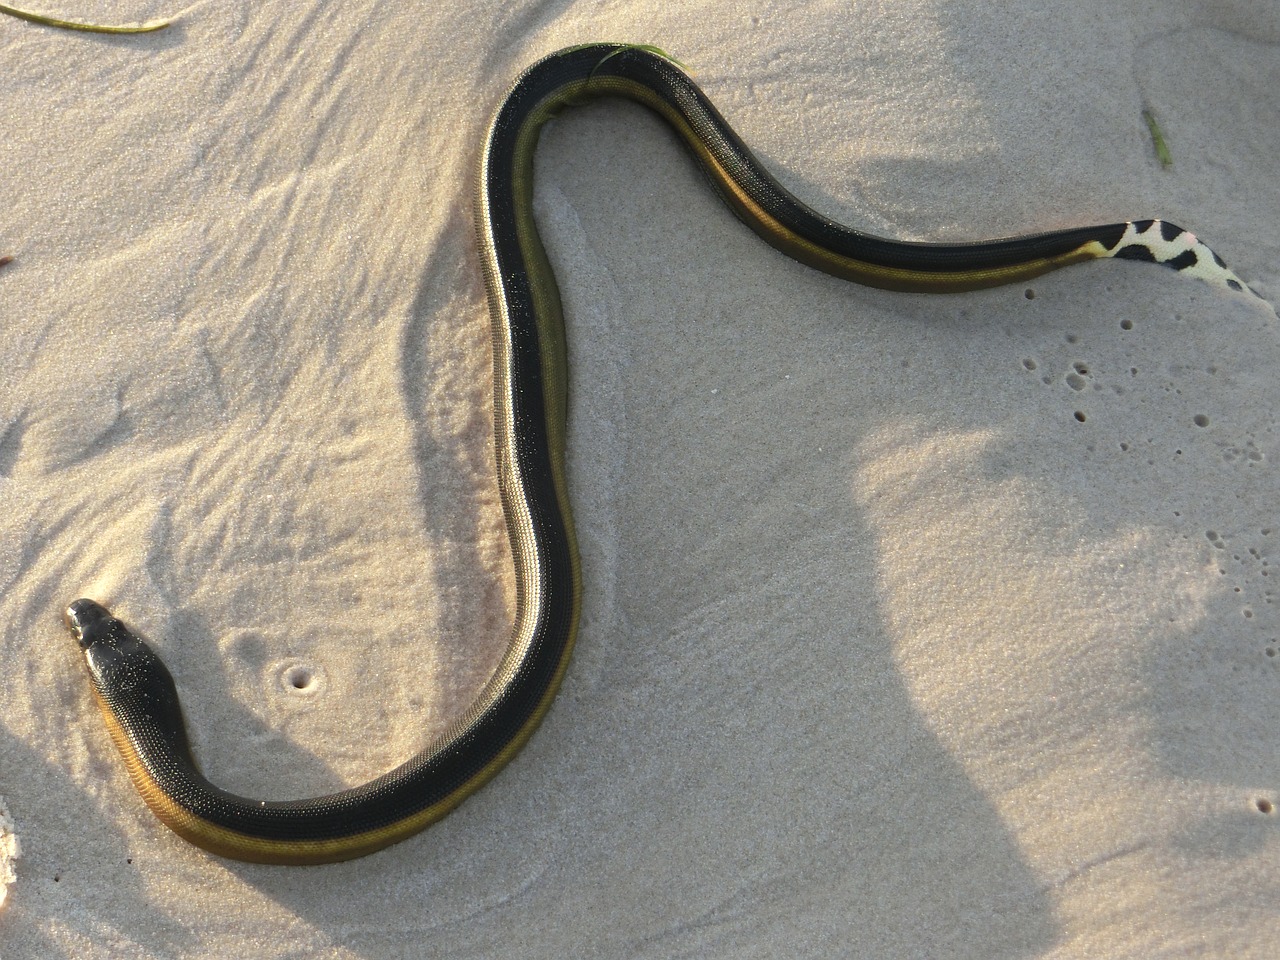 sea-snake venomous dangerous free photo